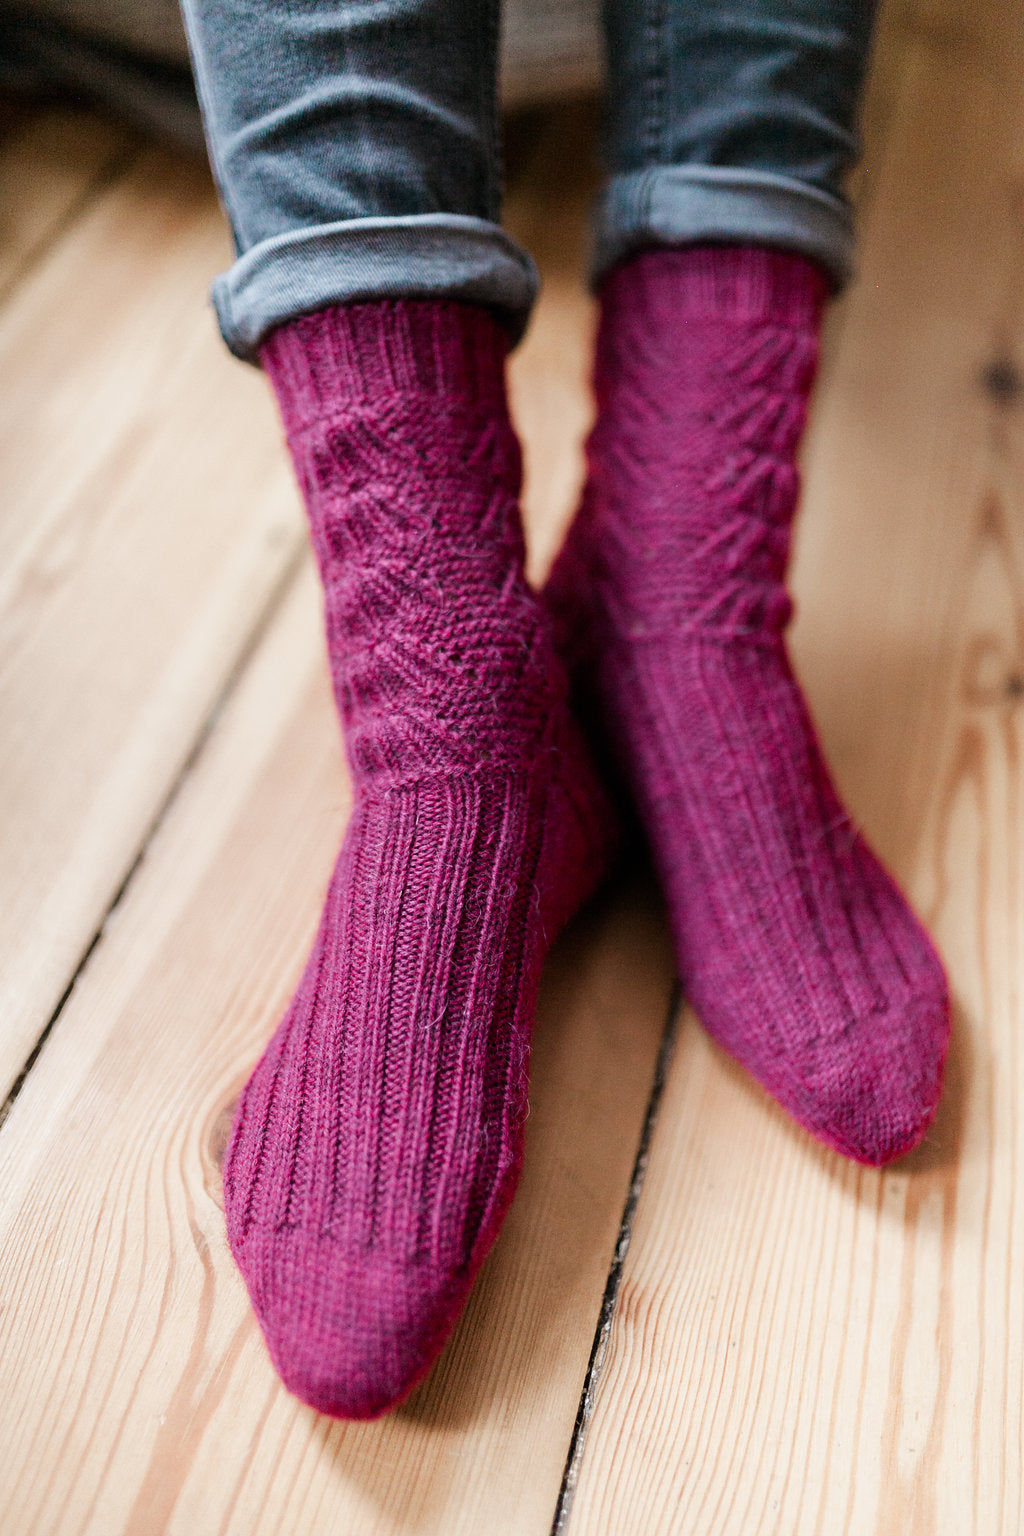 Dancing Sunlight - Socks - Making Stories - Knitting Sustainably.